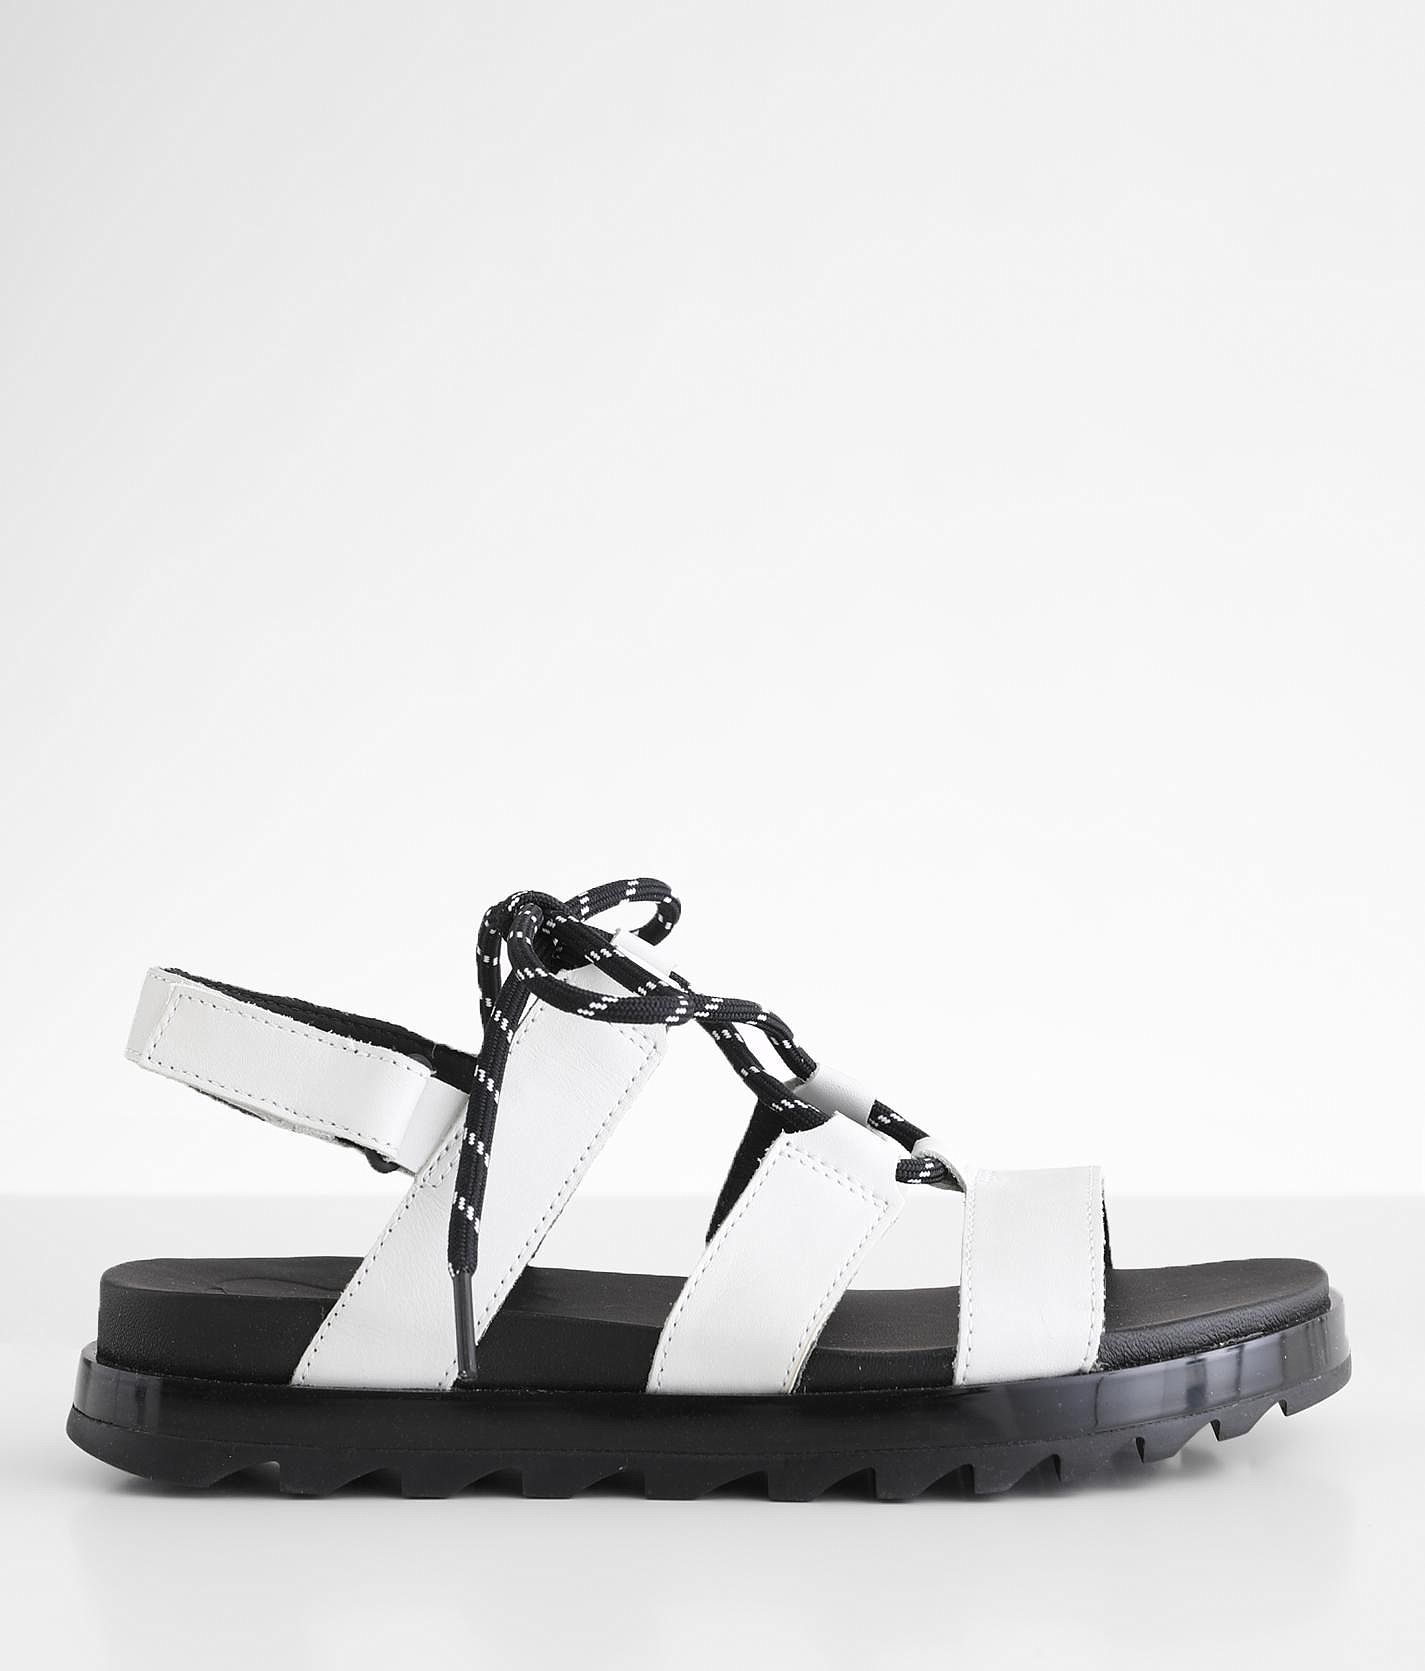 Sorel Roaming™ Leather Sandal - Women's Shoes in White Black | Buckle